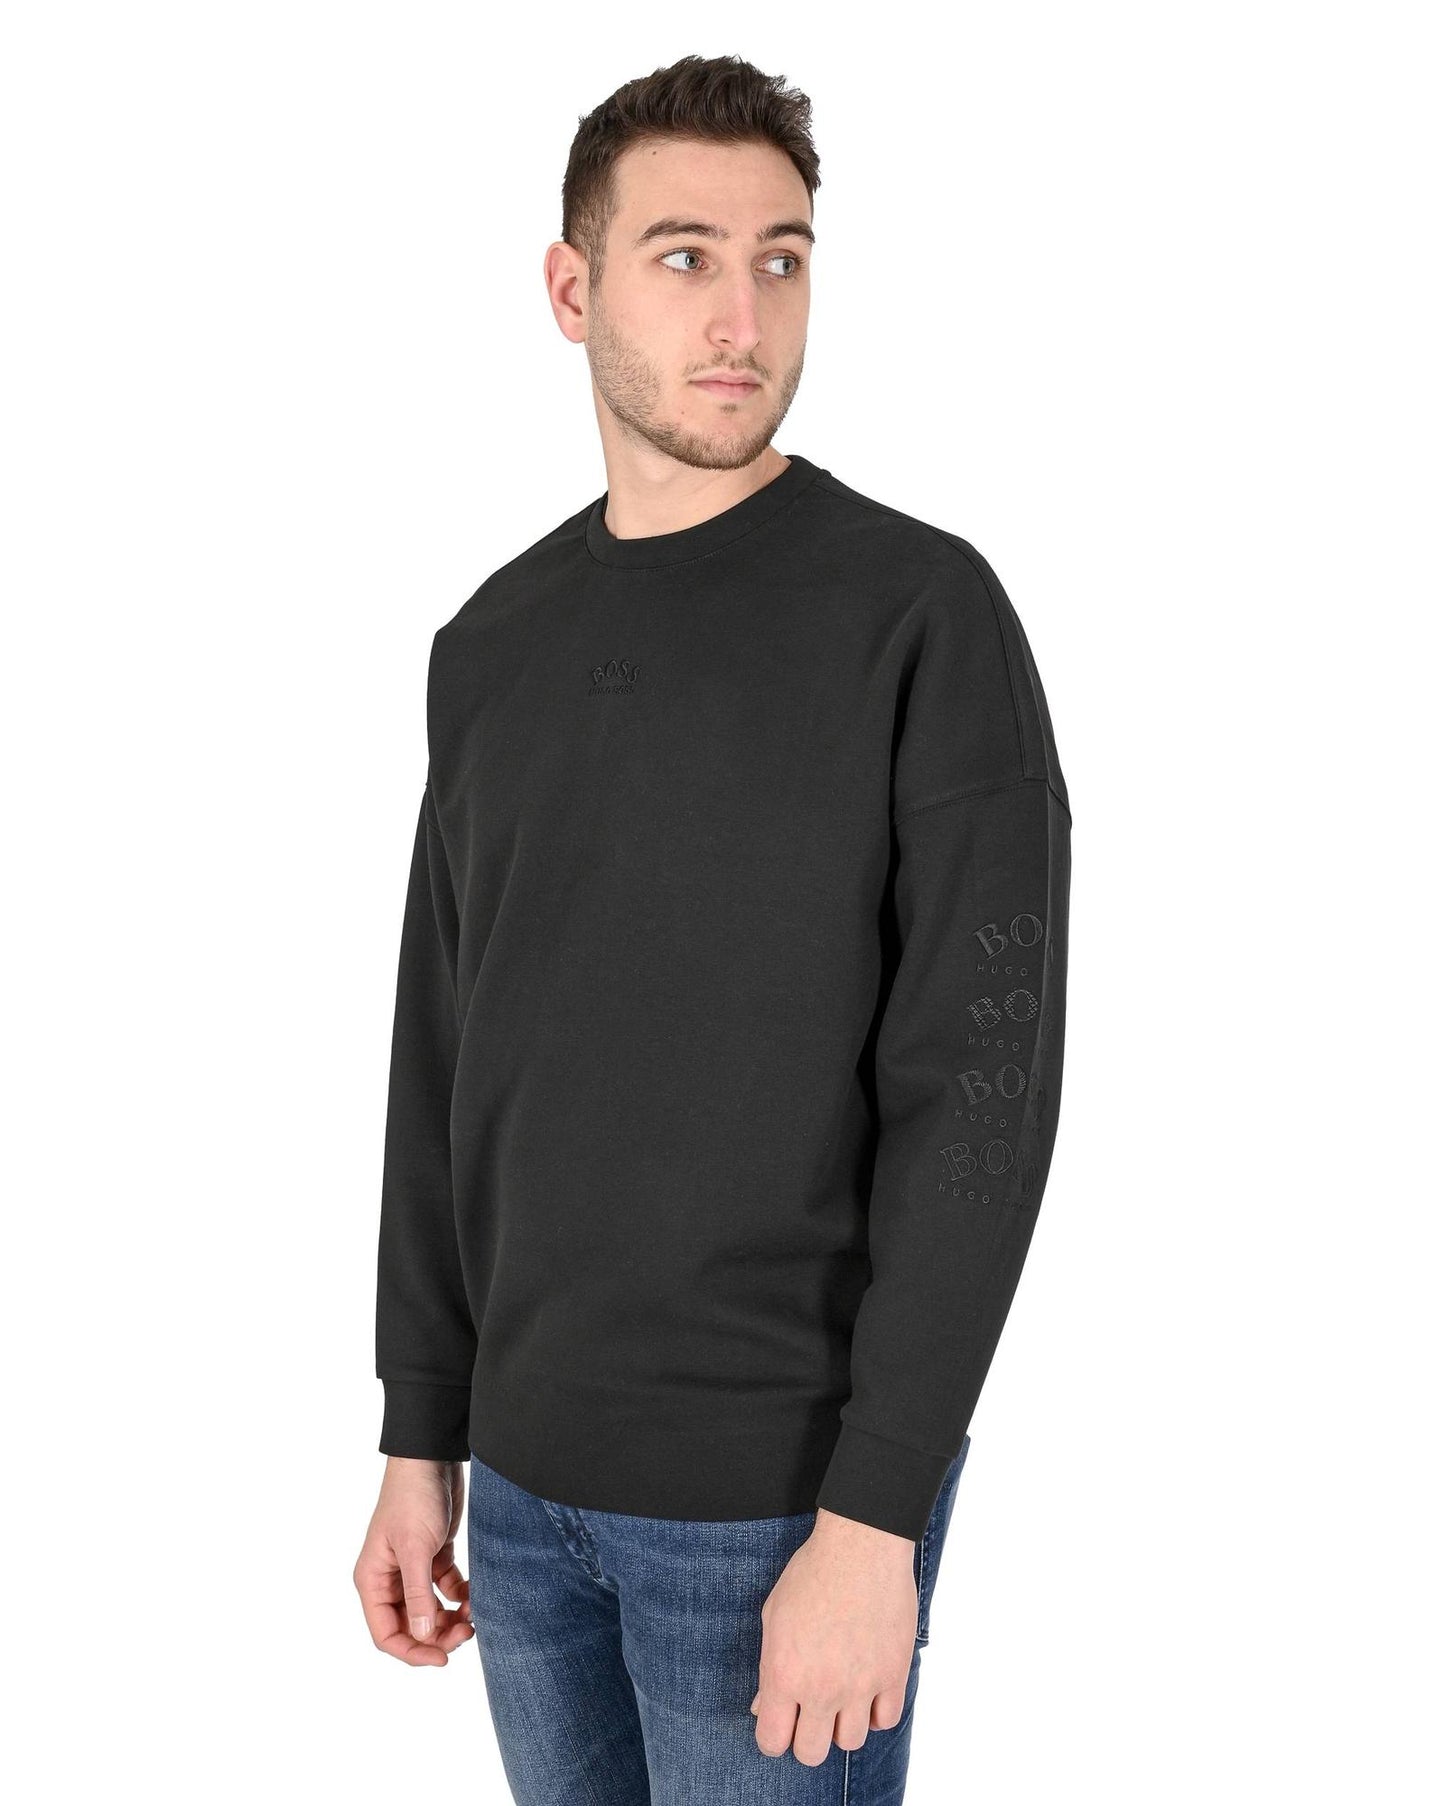 Hugo Boss Men's Black Cotton Blend Sweatshirt in Black - L